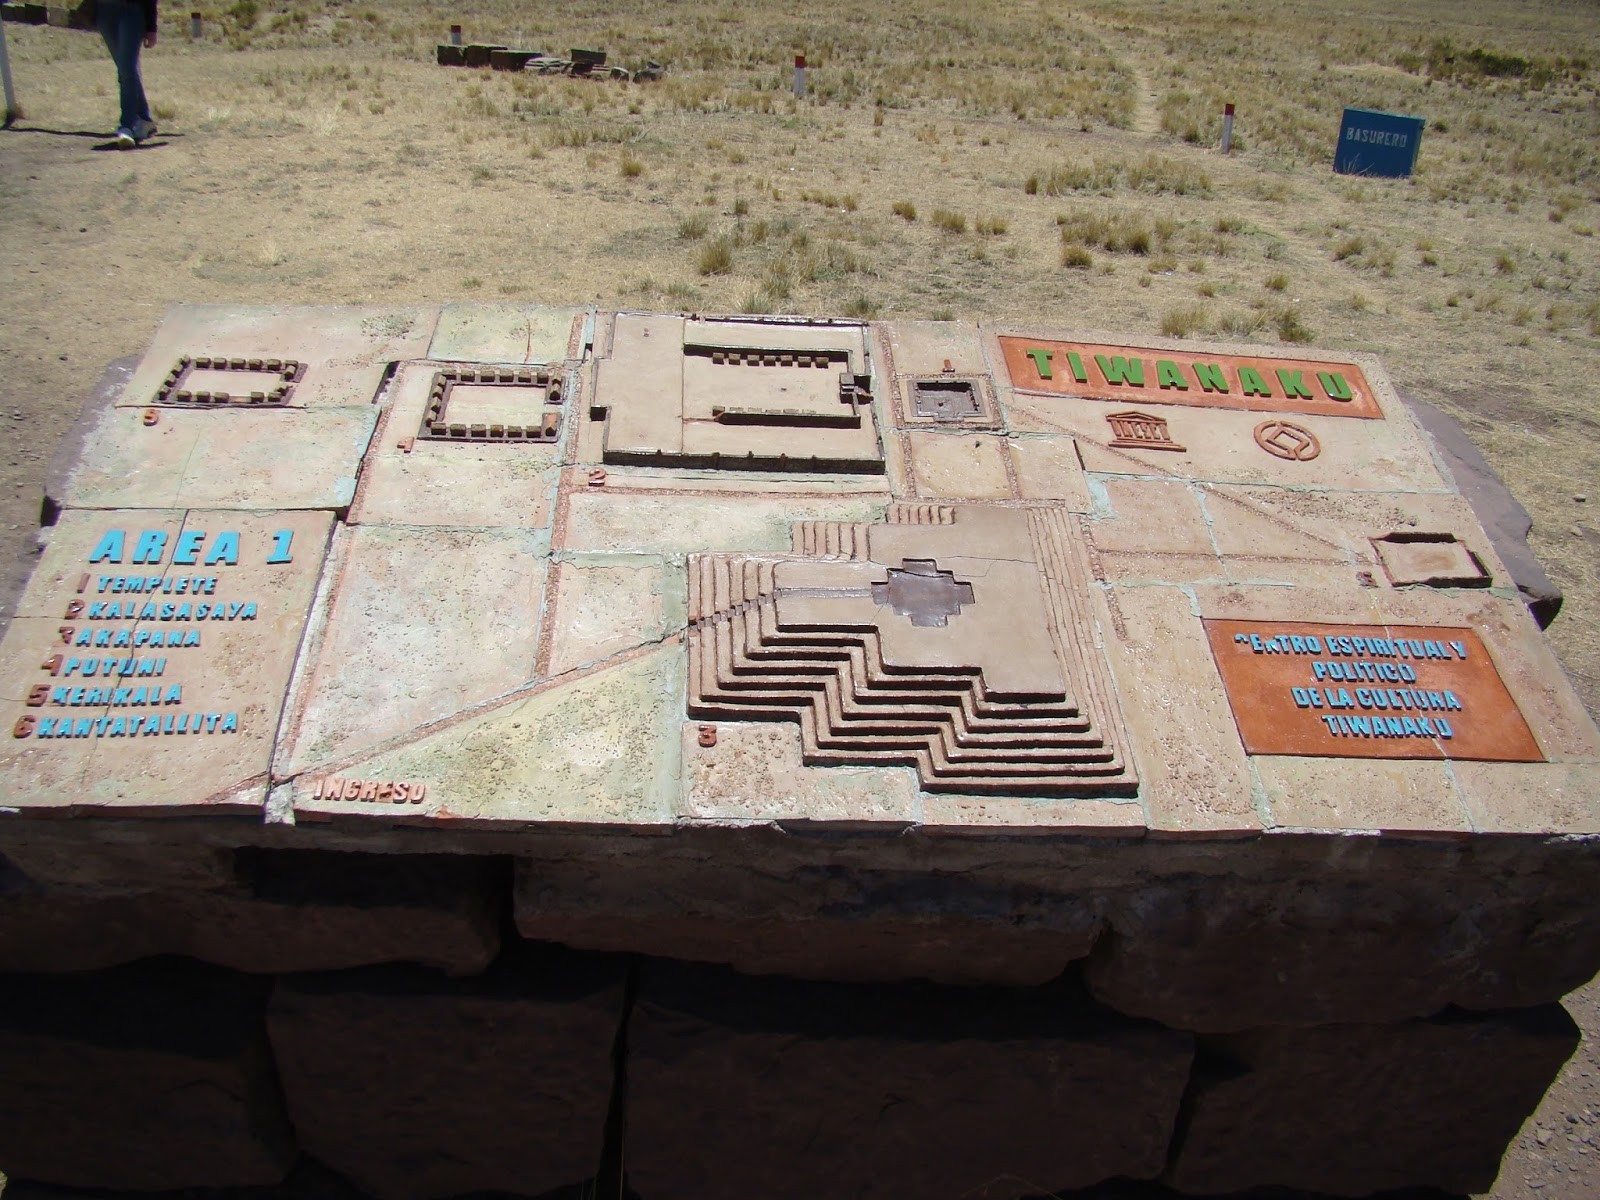 Miniatura do plano geral de Tiwanaku